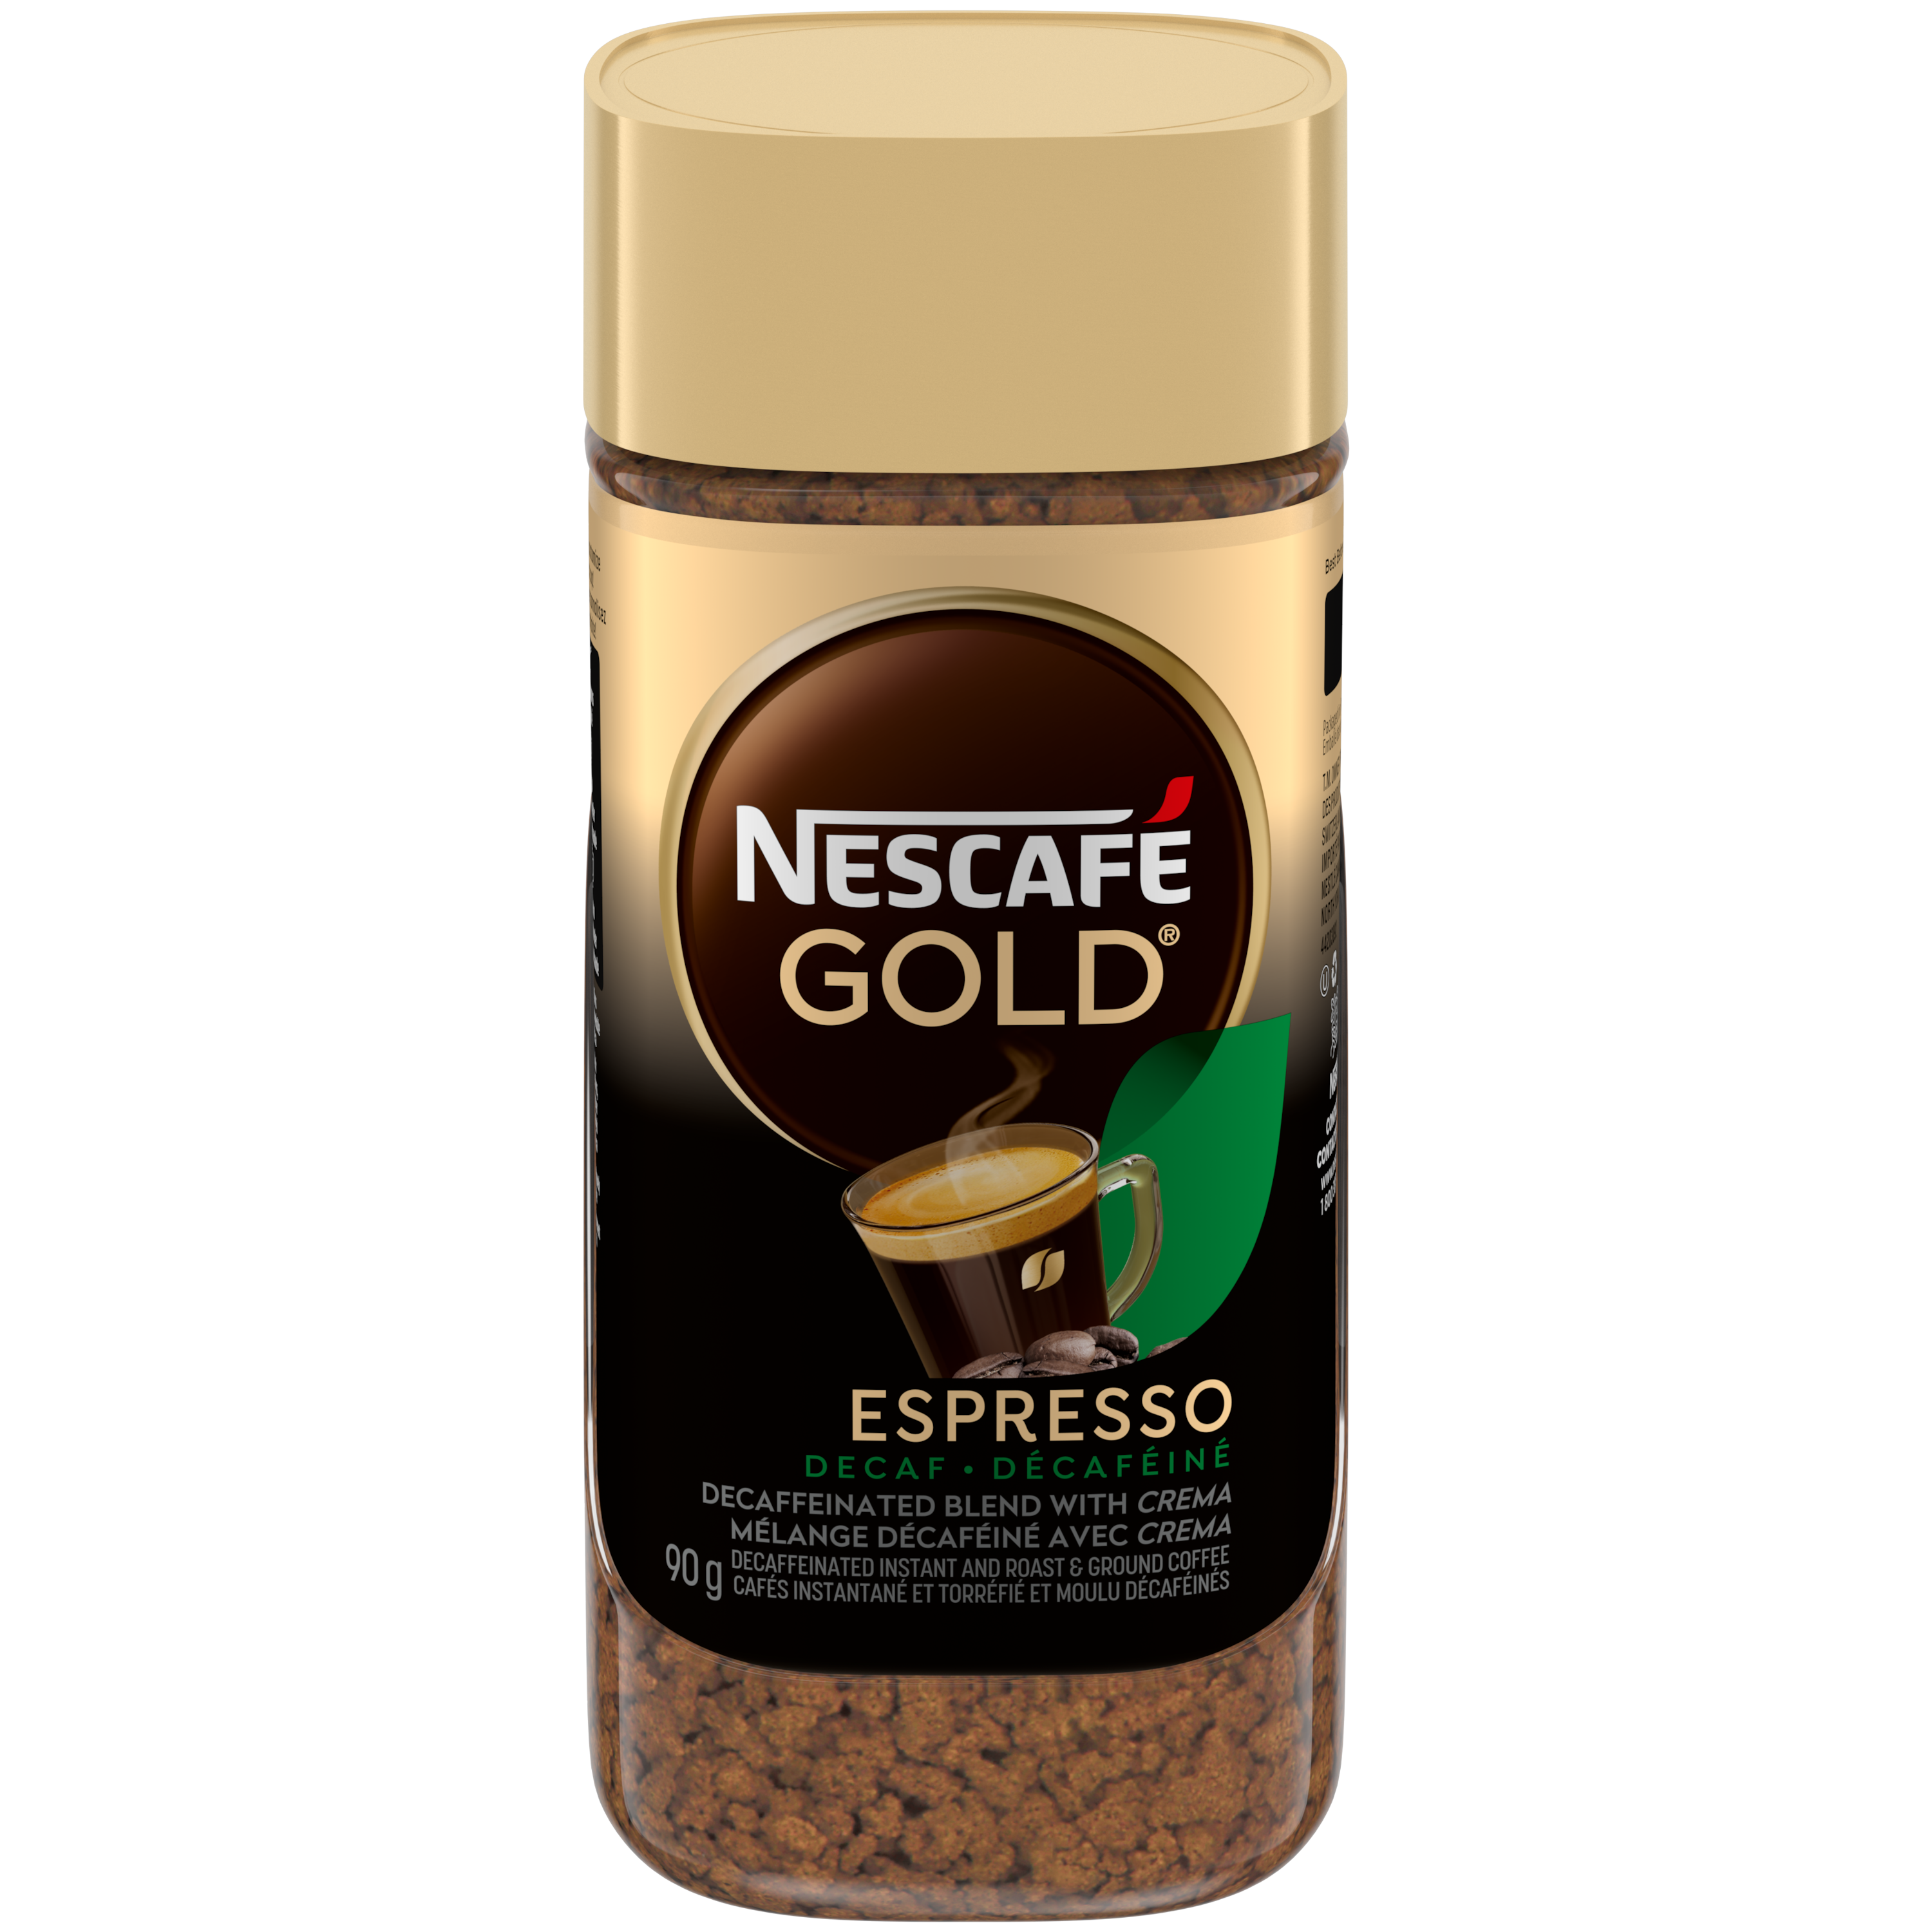 NESCAFE Decaf GOLD EspressoInstant Coffee